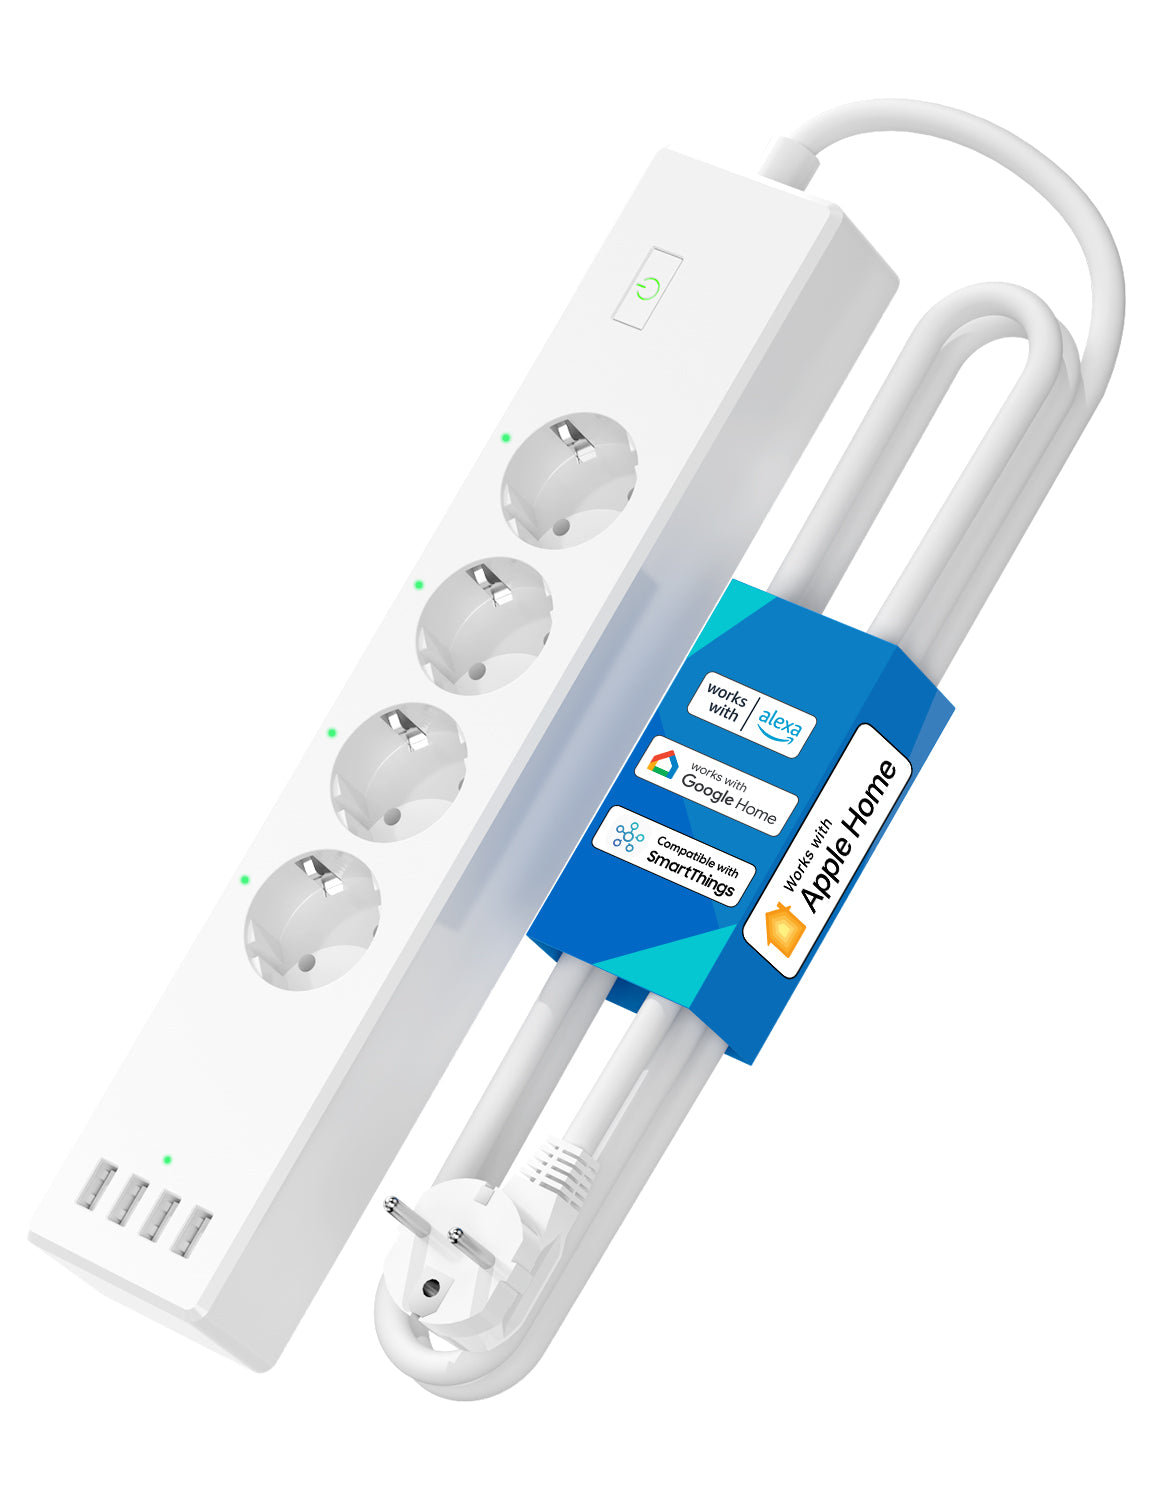 Meross 16A EU Smart Plug Wifi Smart Socket Power Outlet with